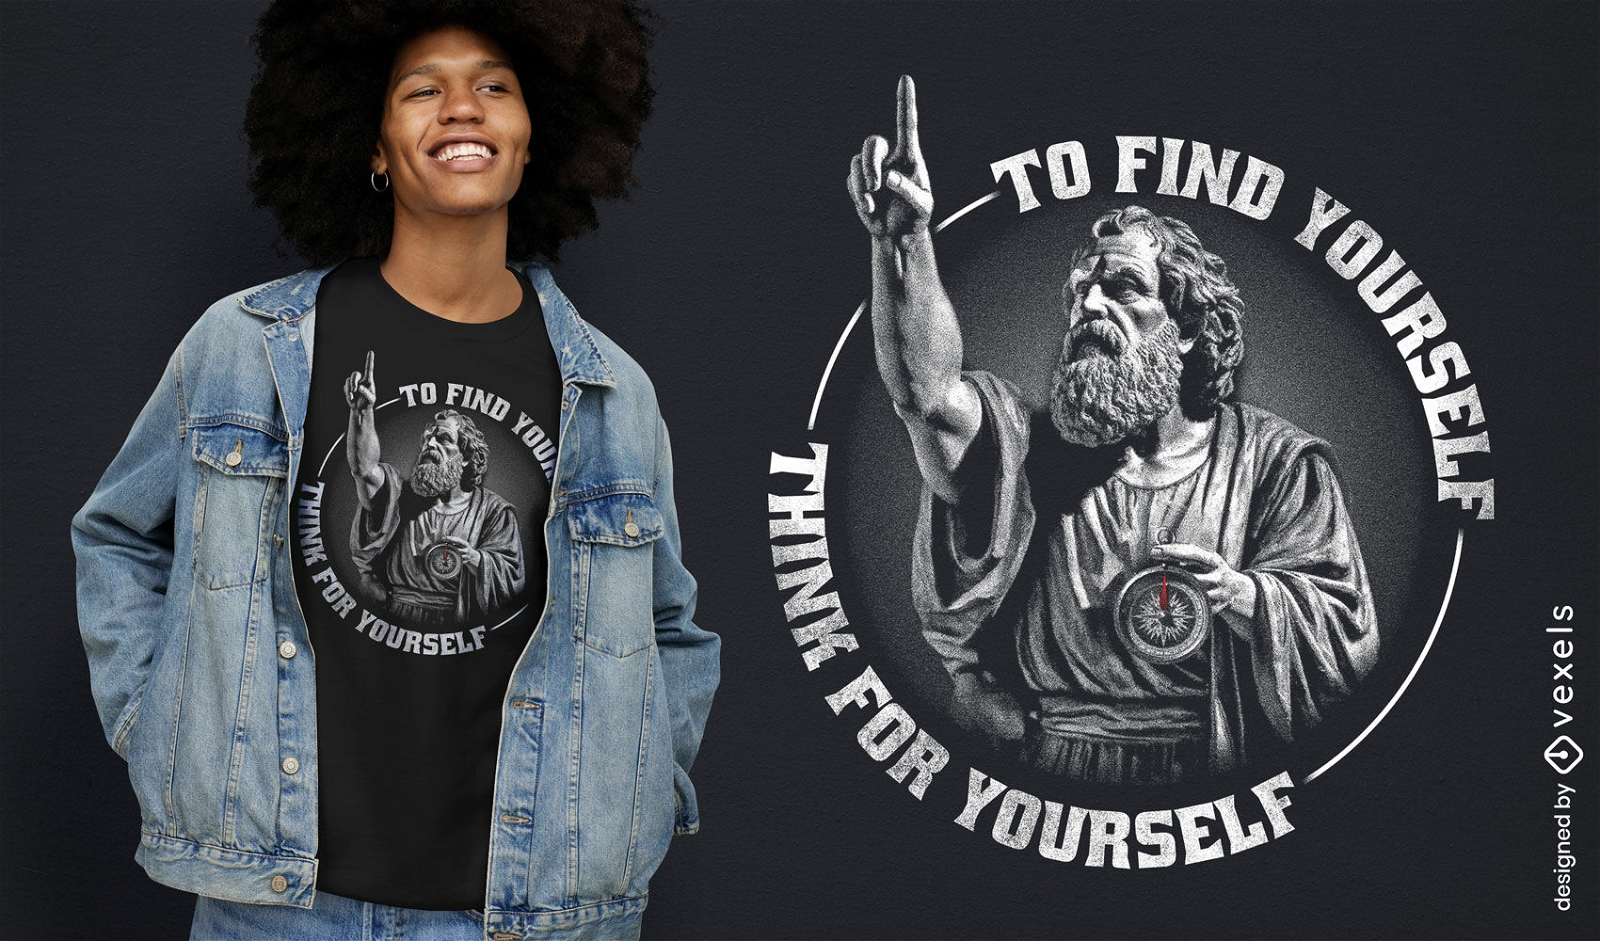 Diseño de camiseta con cita de sabiduría de Sócrates.